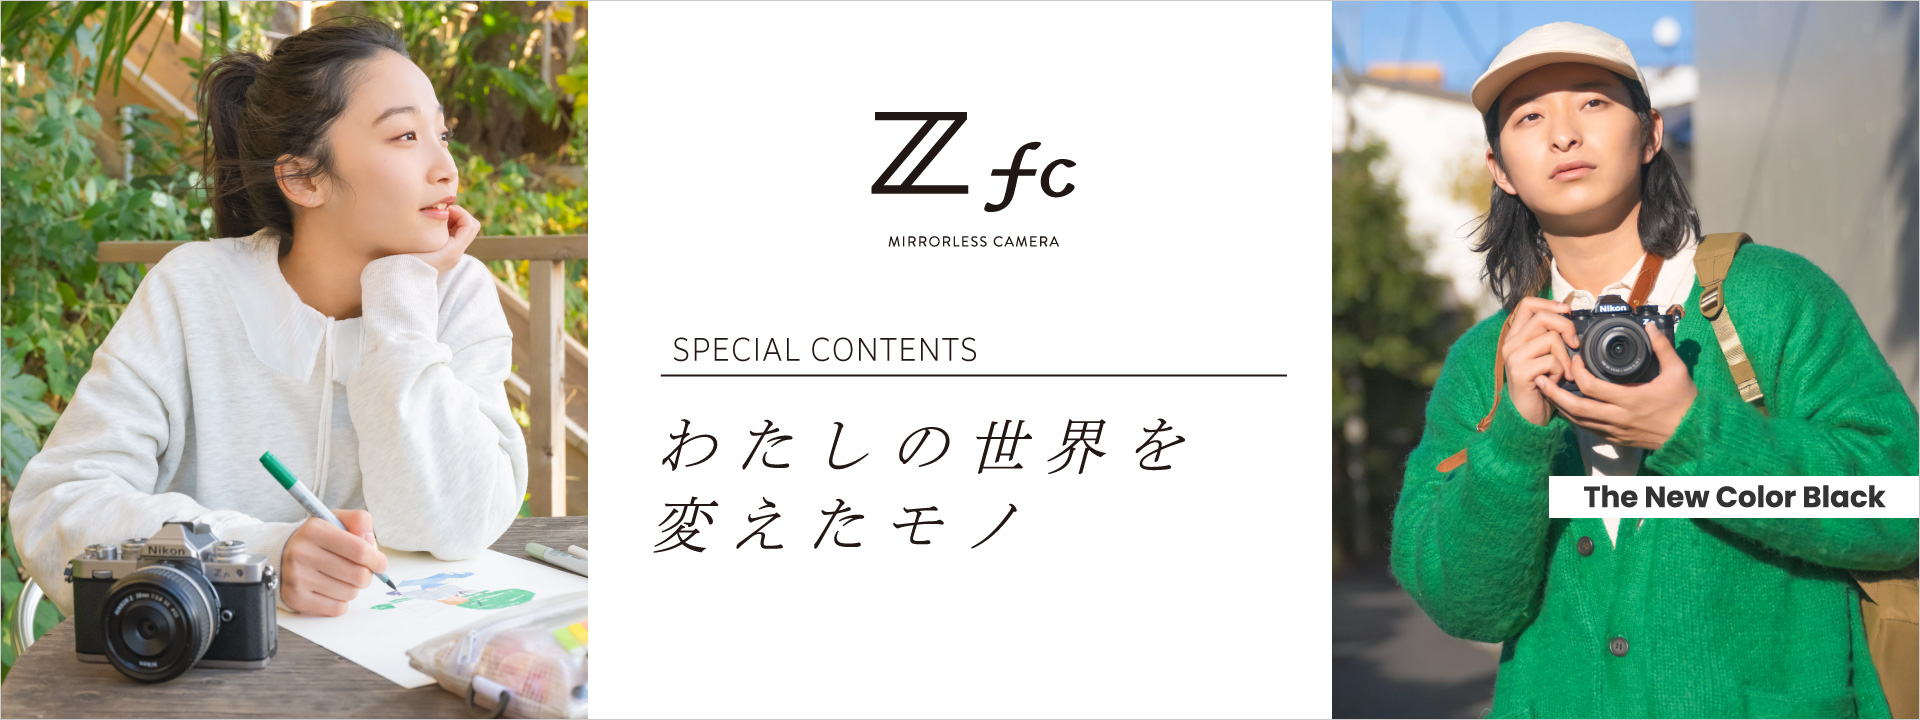 Z fc - 概要 | ミラーレスカメラ | ニコンイメージング